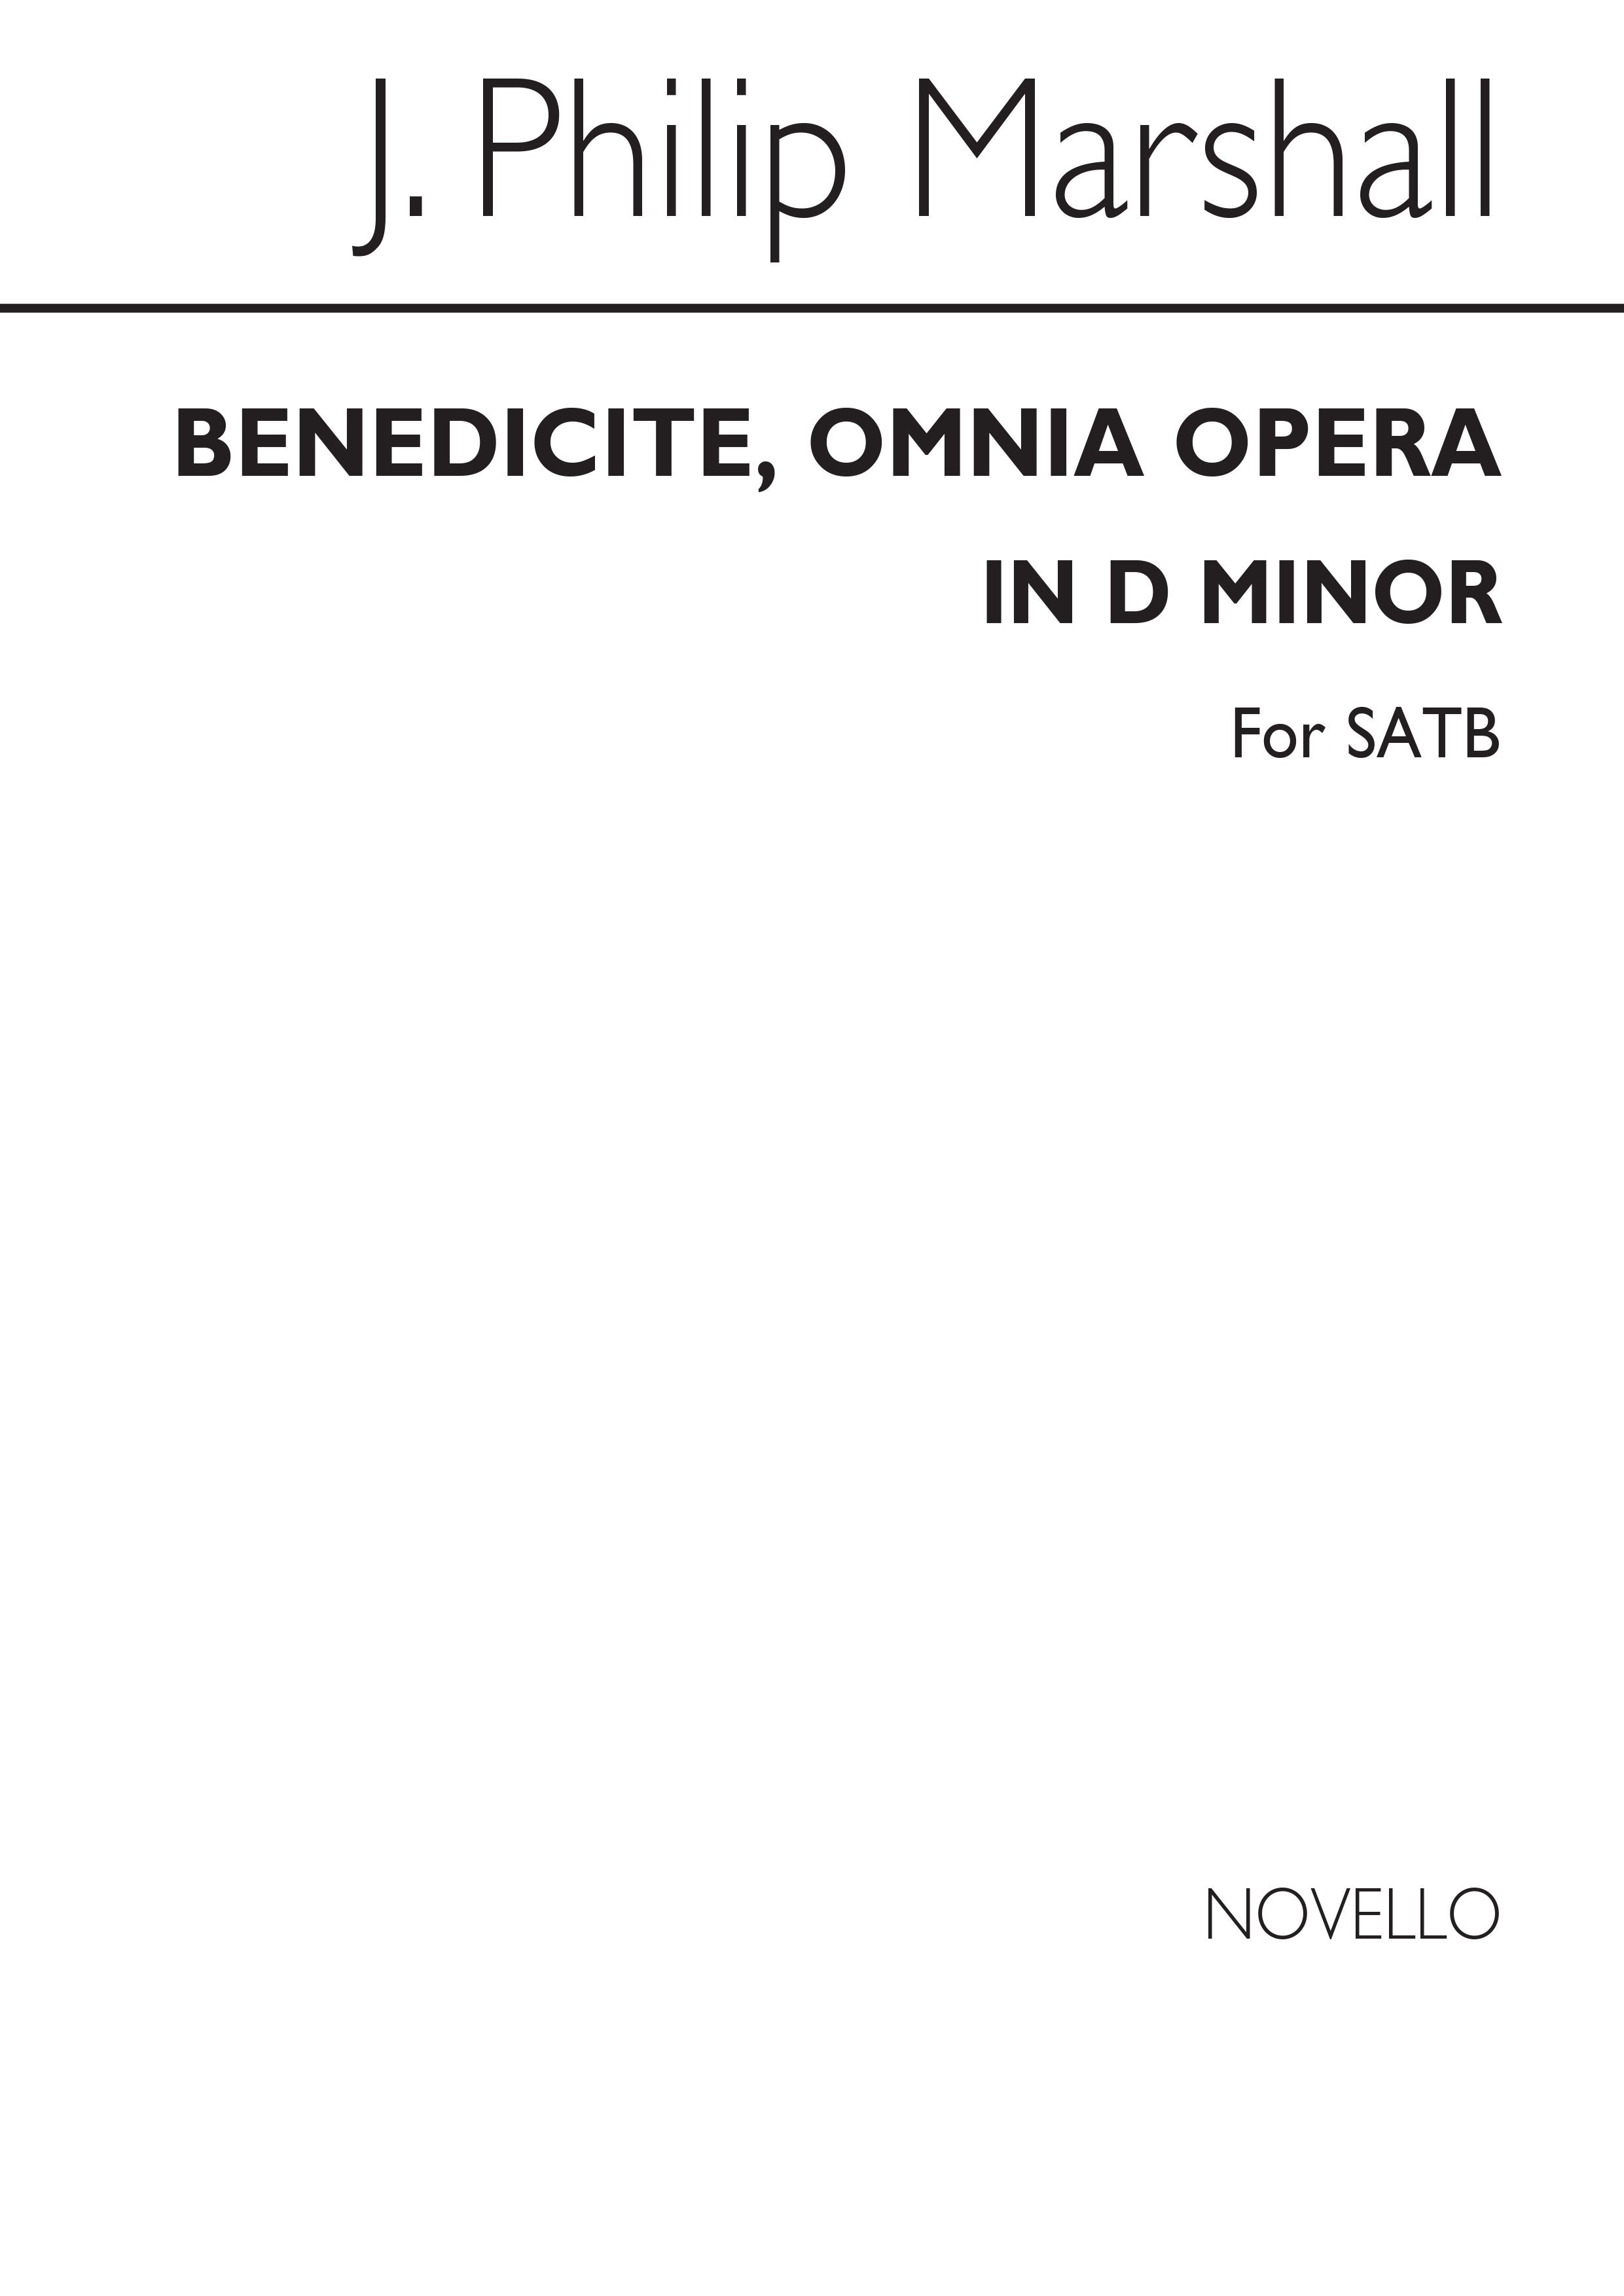 J. Philip Marshall: J Benedicite Omnia Opera D Min Satb: SATB: Vocal Score